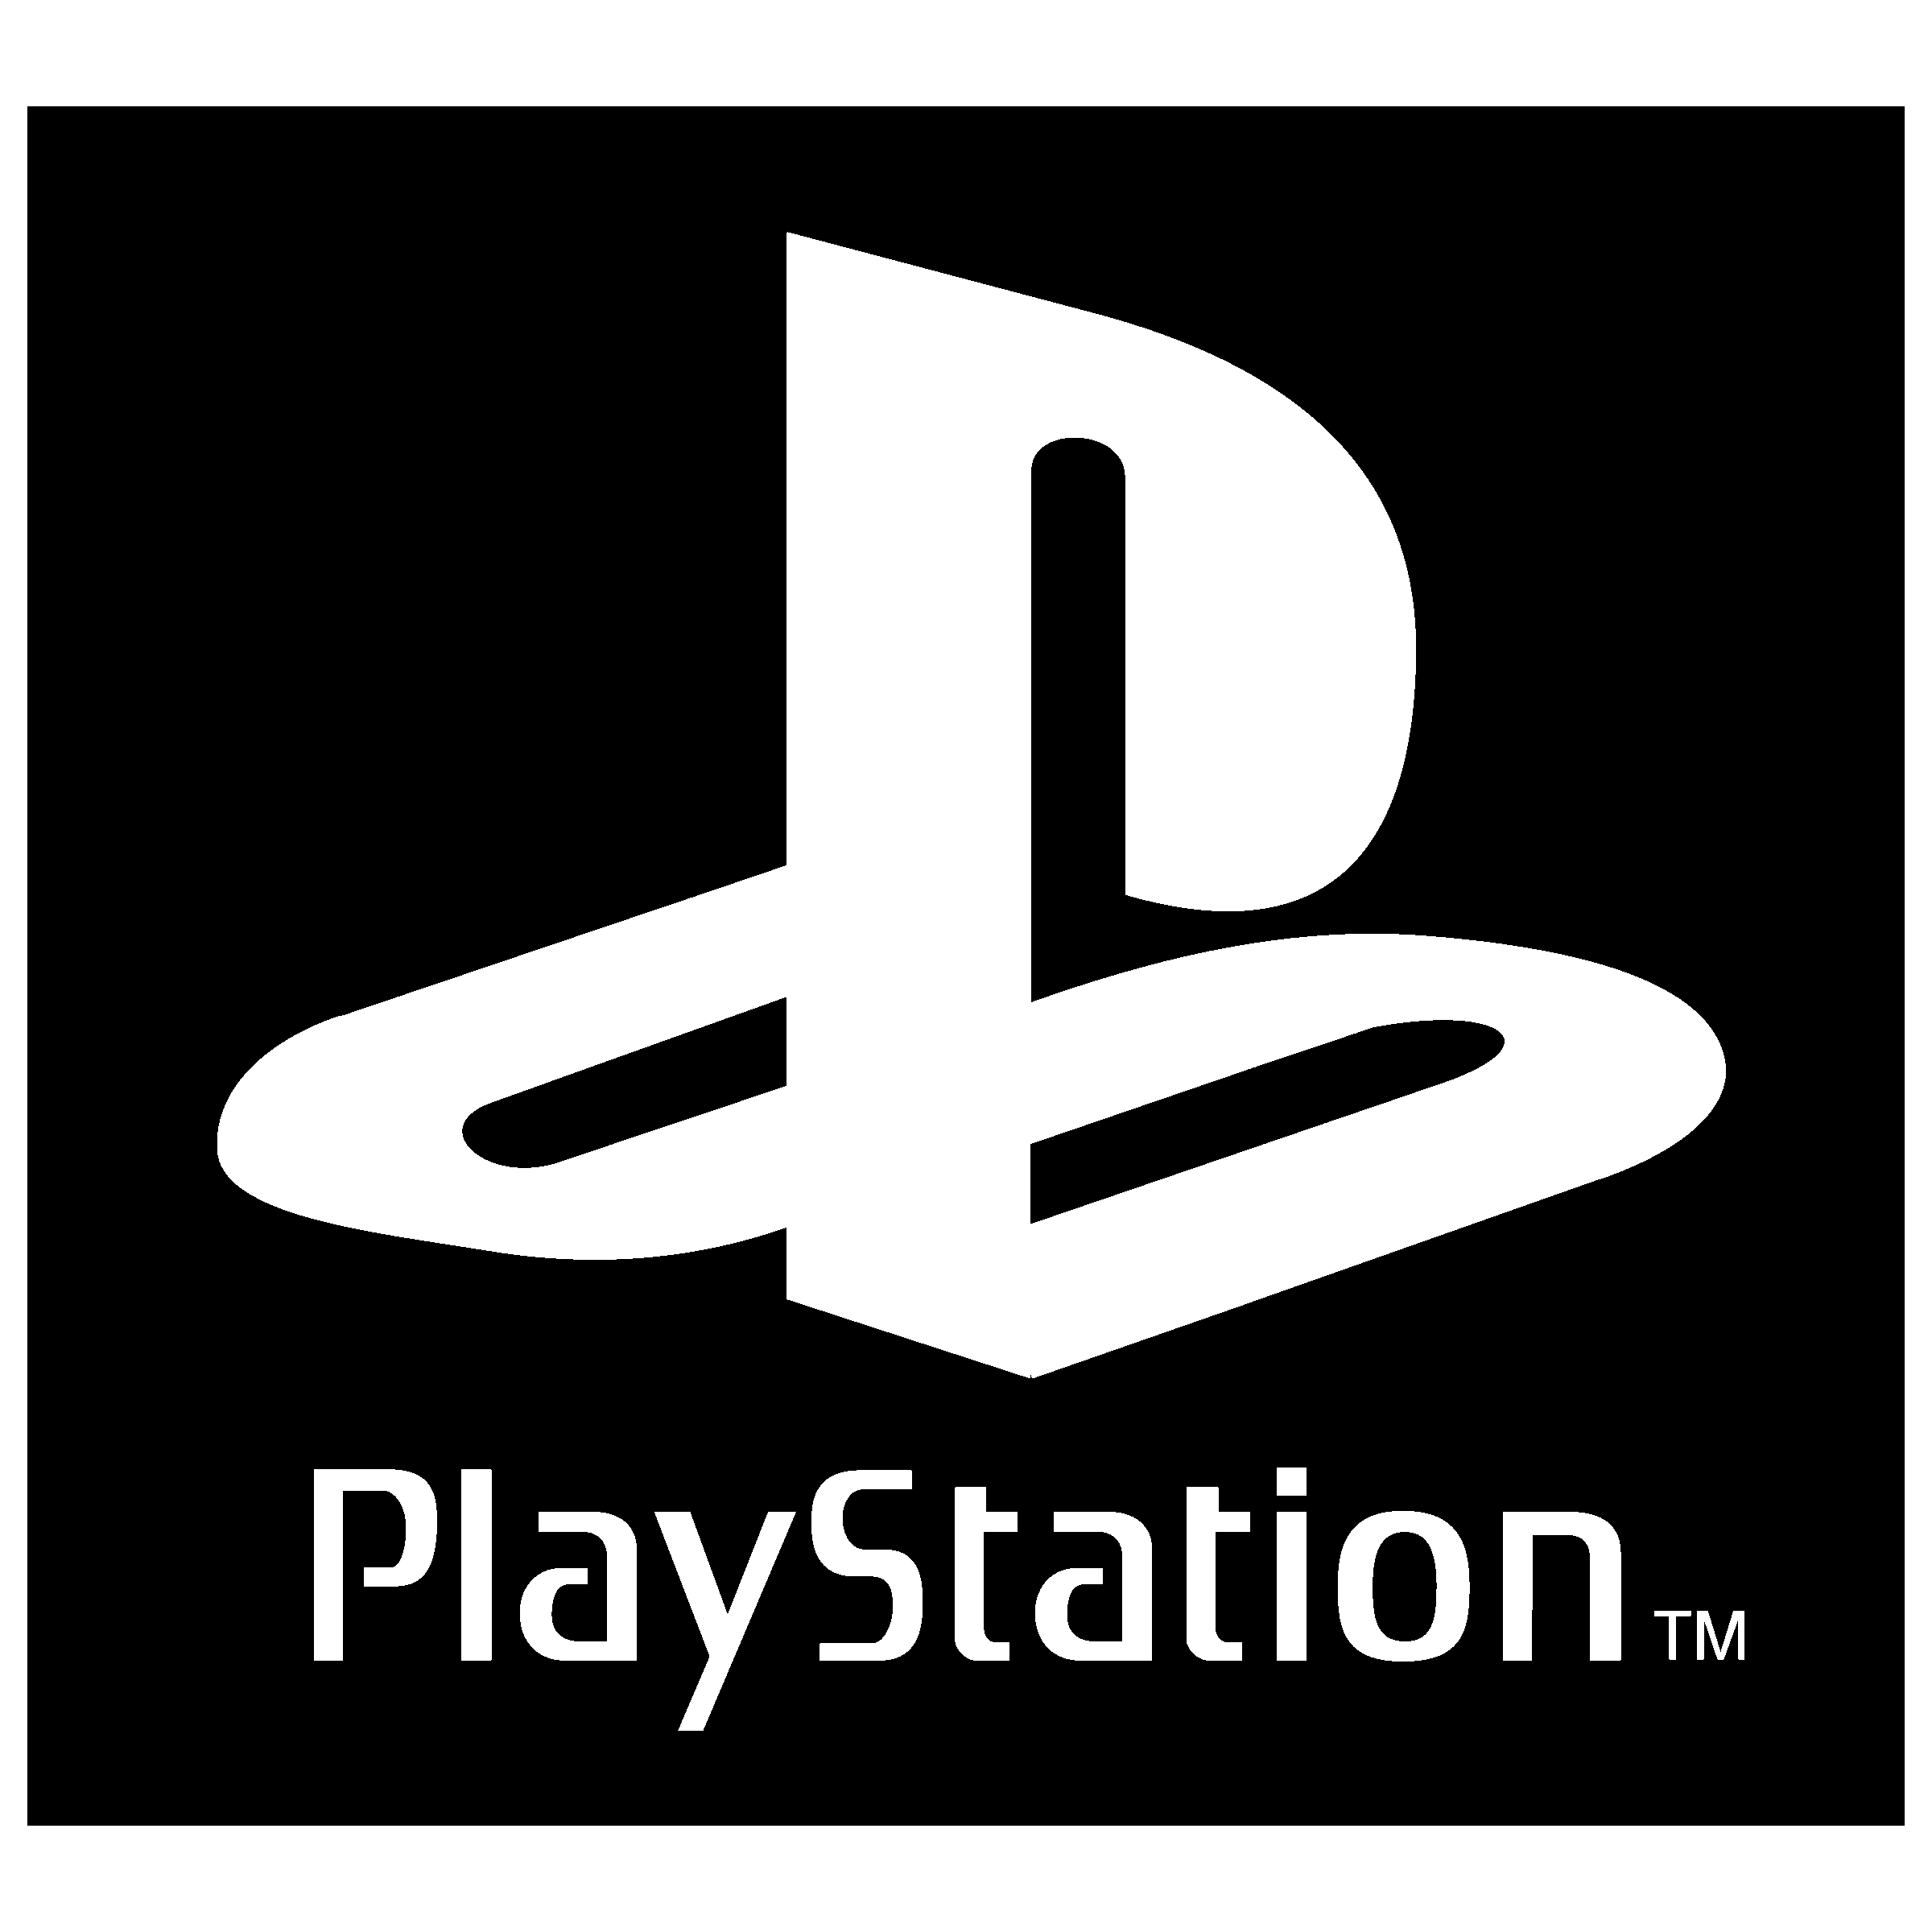 PlayStation Logo PNG Images